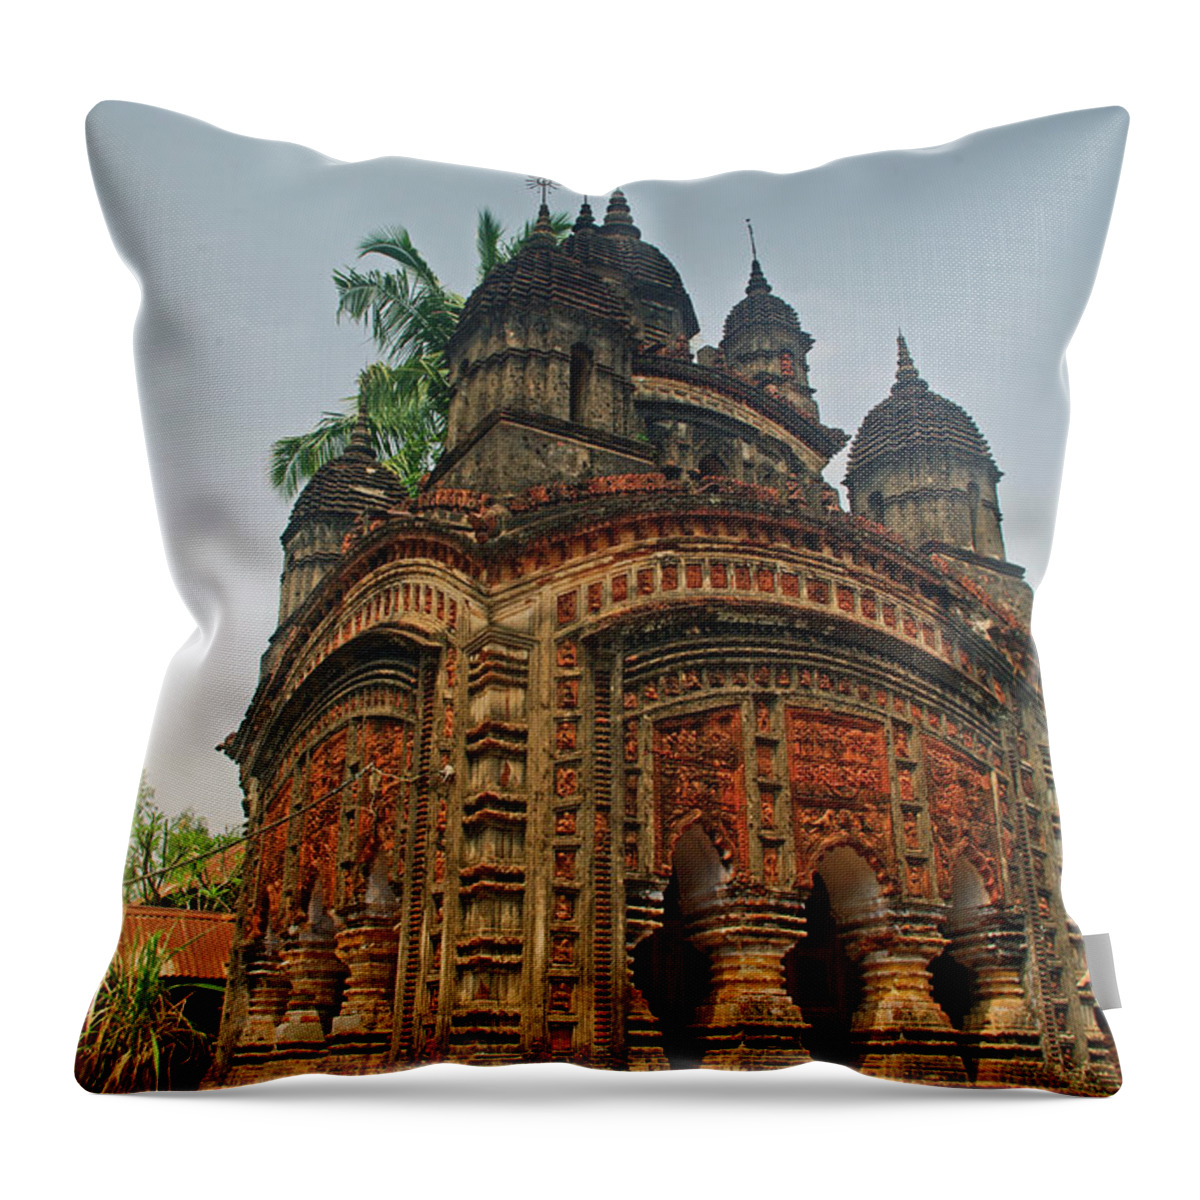 Tranquility Throw Pillow featuring the photograph Nabaratana Terracotta Temple, Joypur by Amitabha Gupta